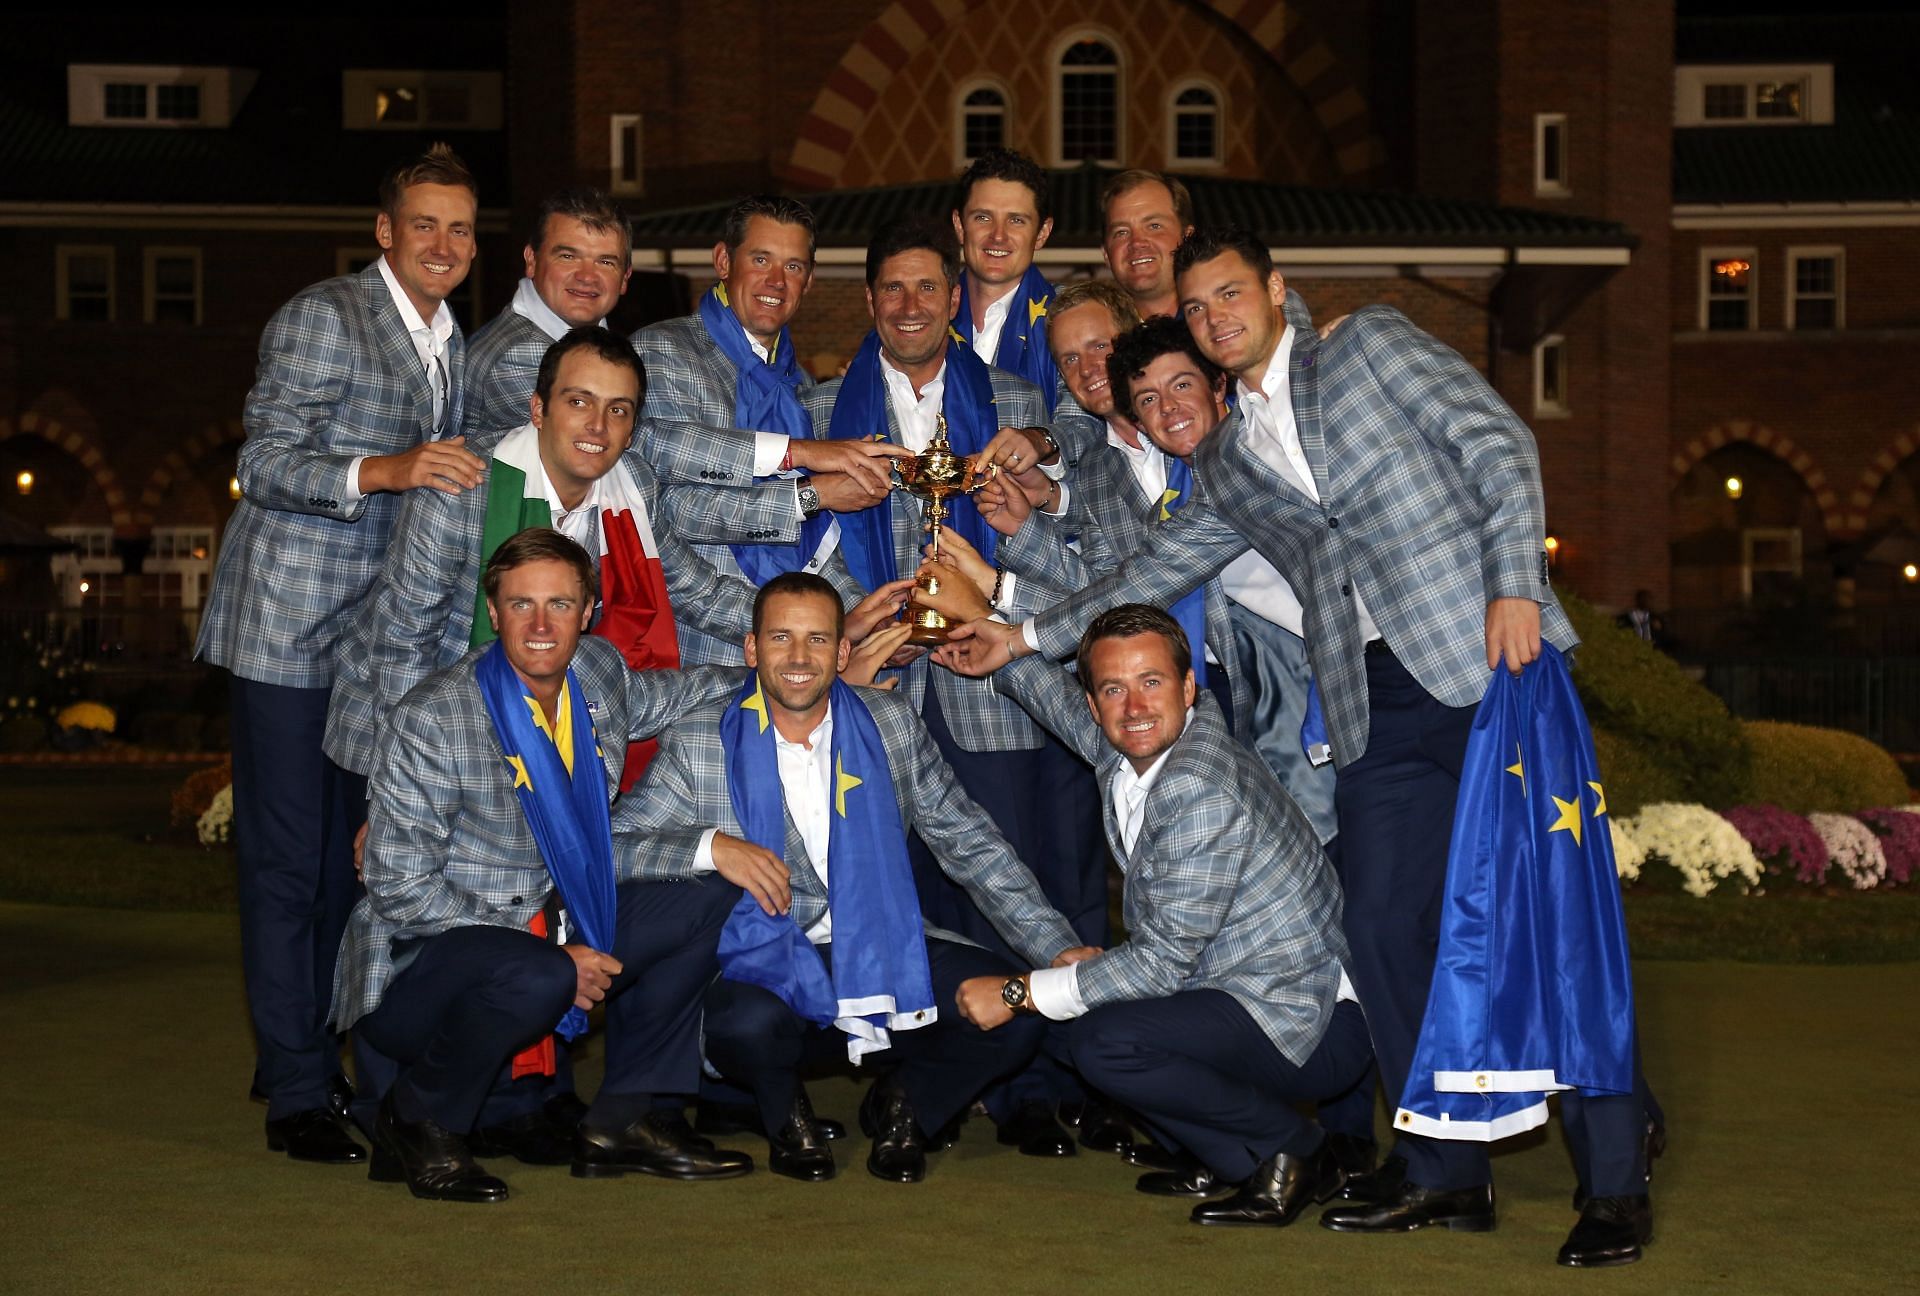 Ryder Cup - Day Three Singles - The winning European team